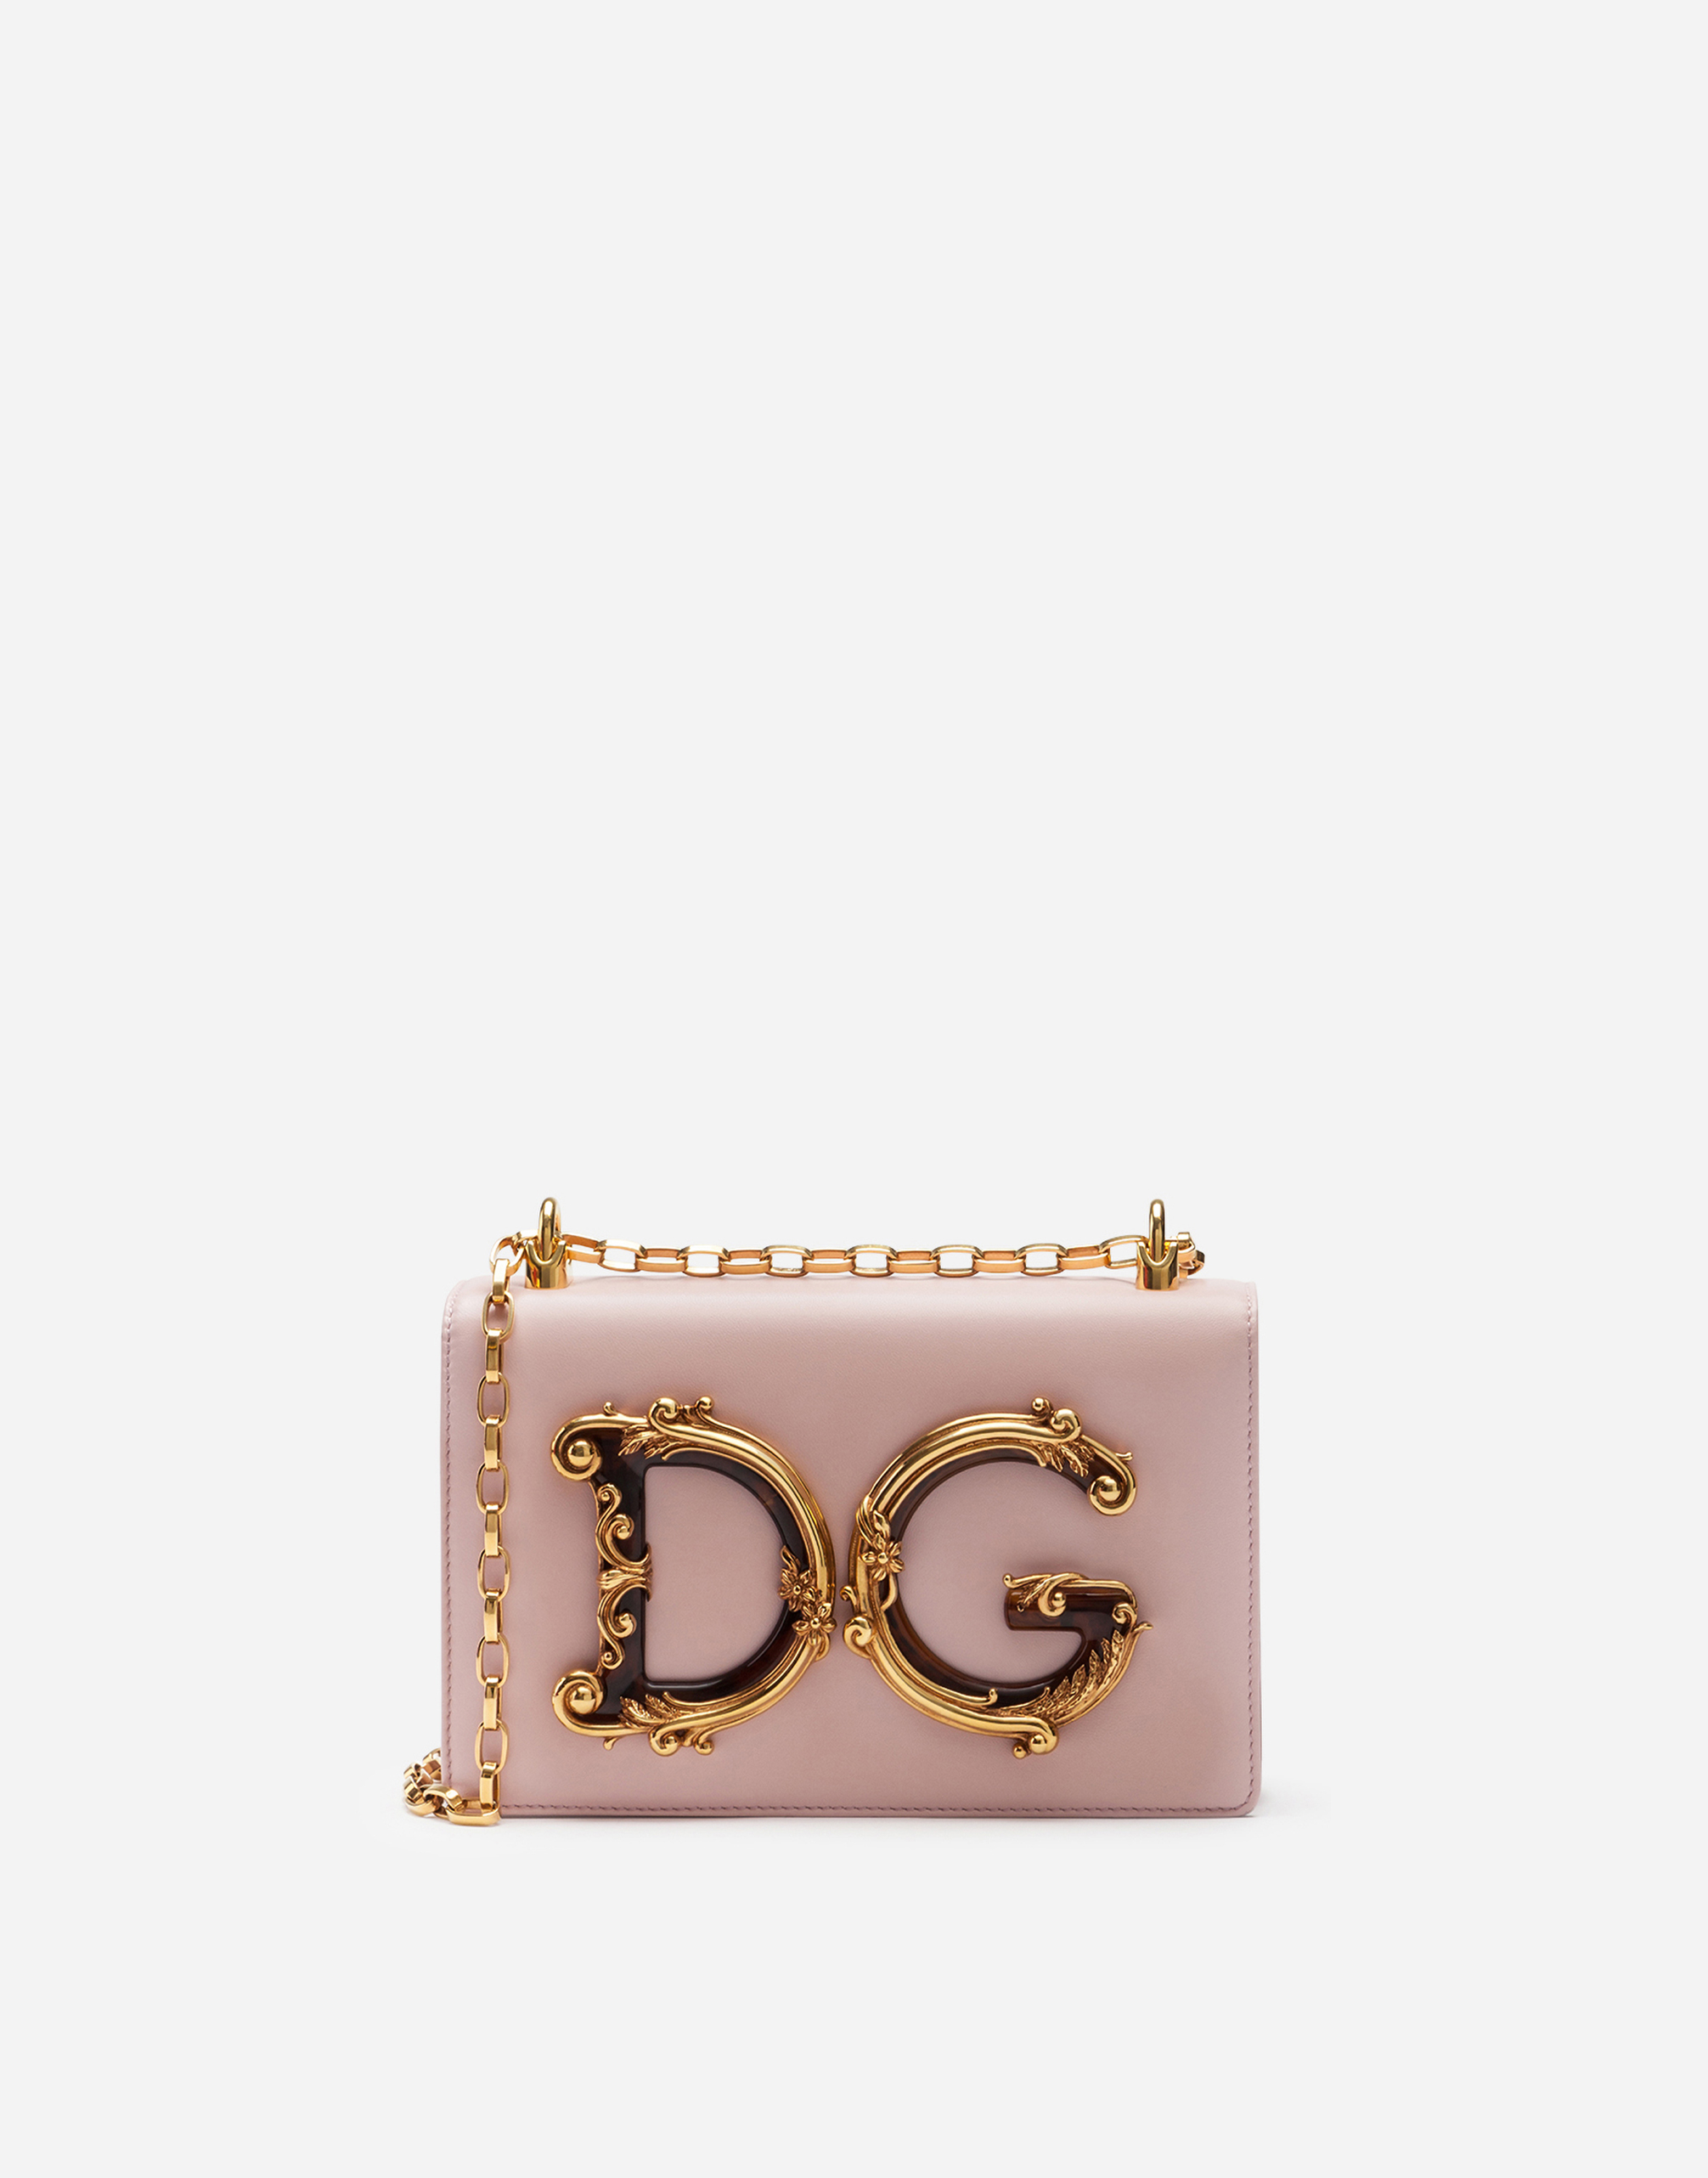 DG Girls shoulder bag in nappa leather in Pink